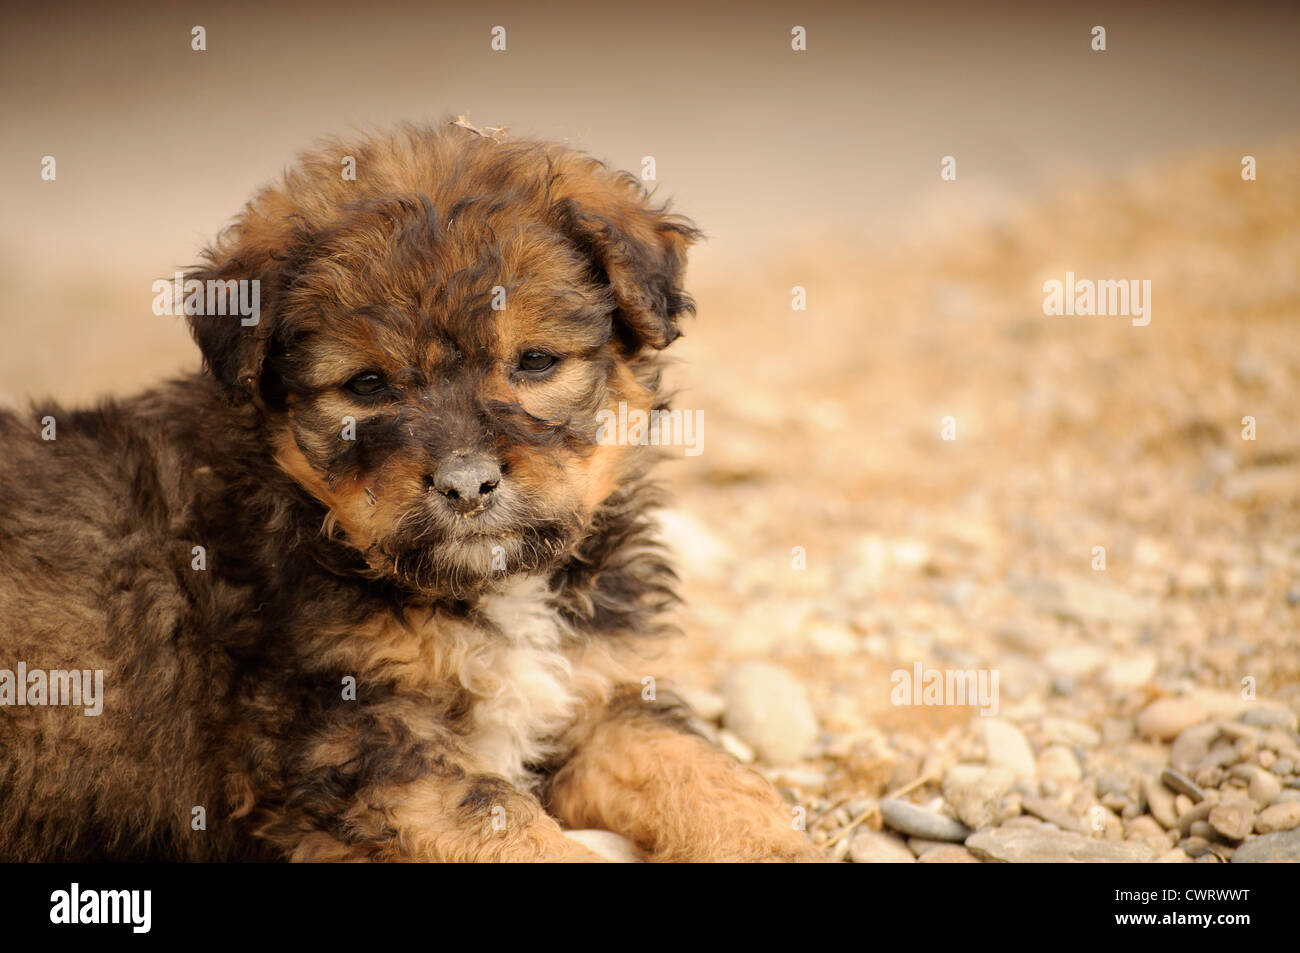 Adorable puppy Stock Photo